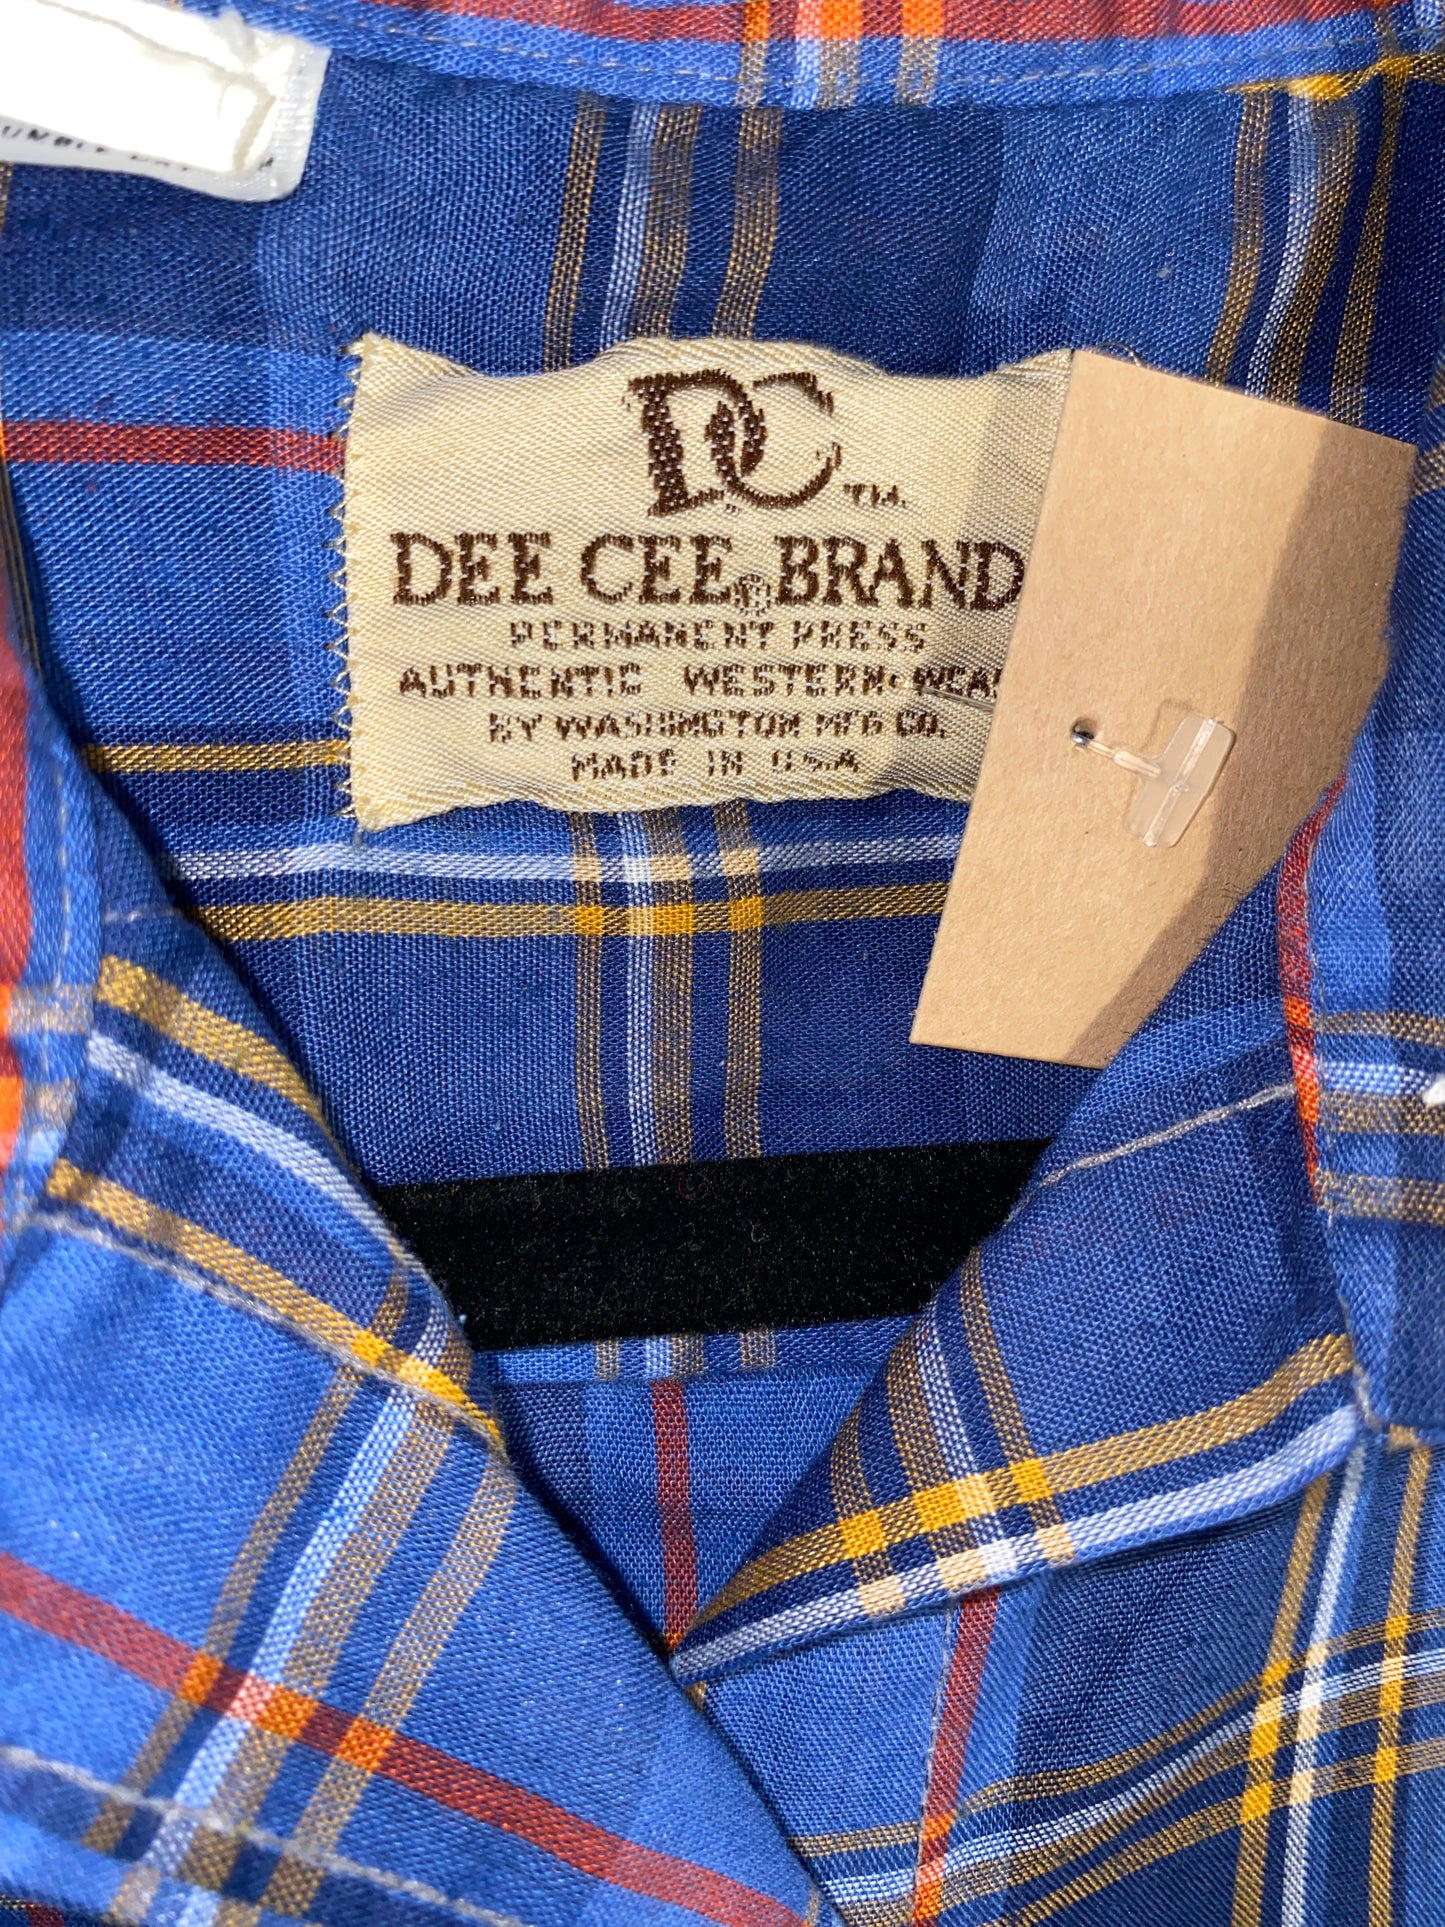 Vintage Dee Cee Brand Blue Plaid Sawtooth Pocket Pearl Snap